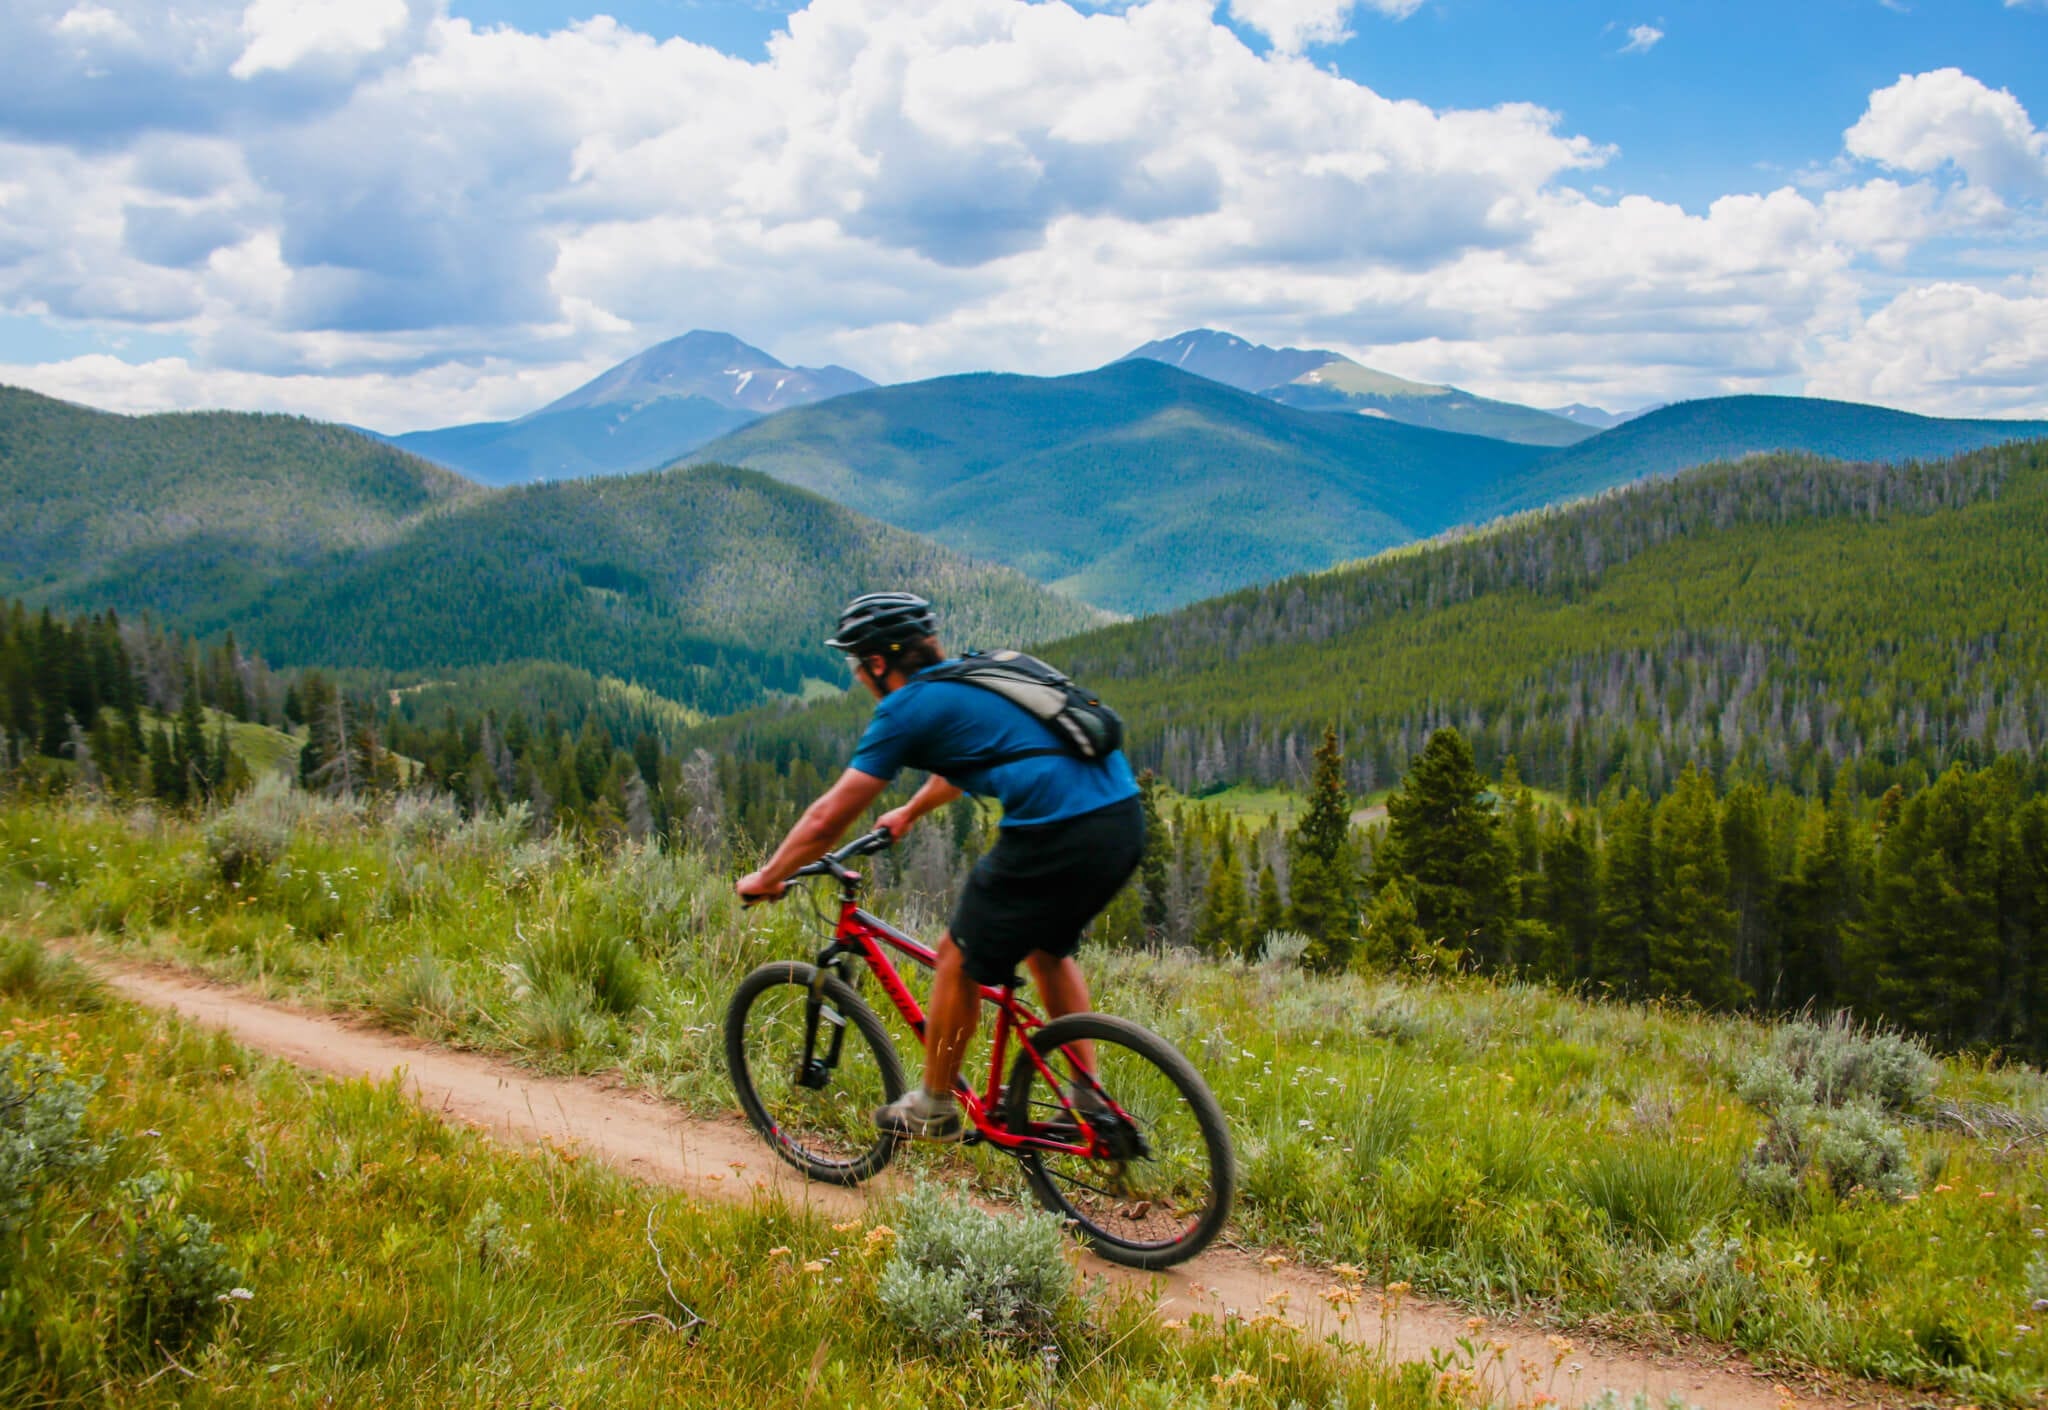 A mountain biker on the Colorado Trail, one of the classic mountain biking trails in Breckenridge.